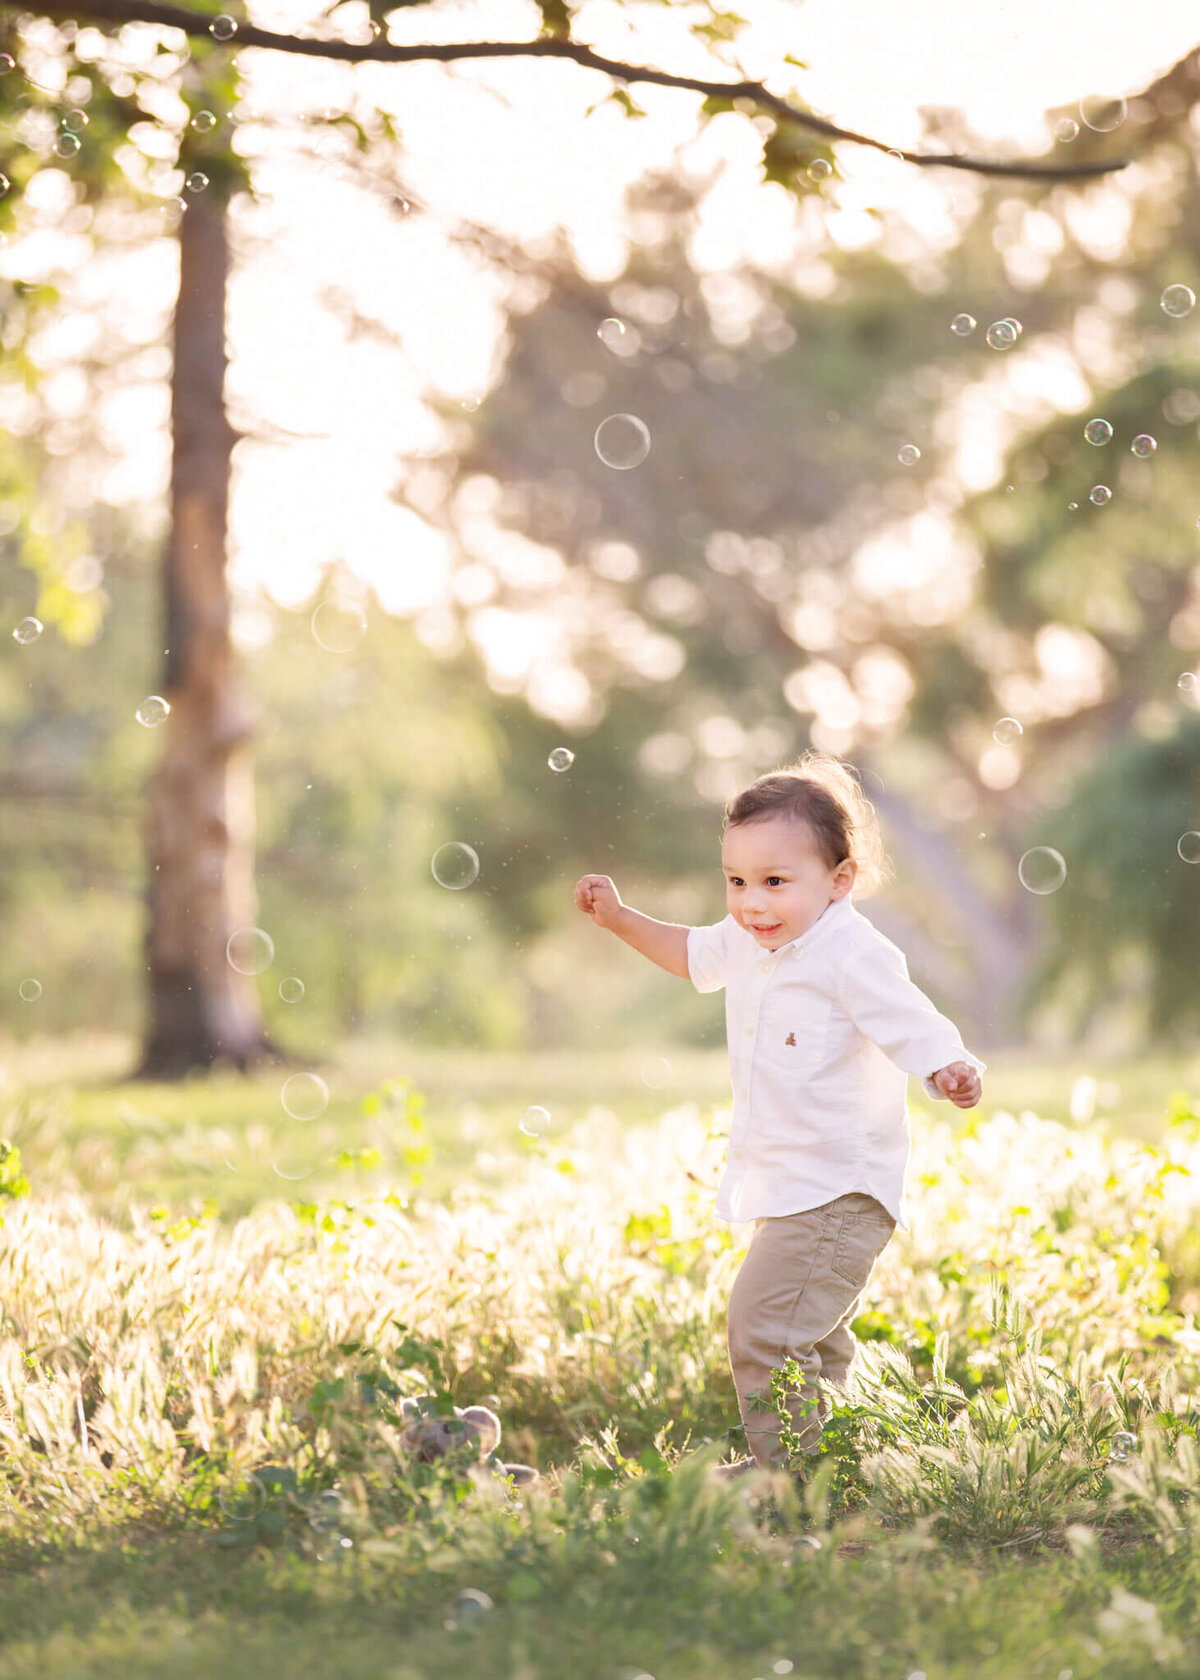 Little boy running through the park laughing - Los Angeles Children’s Photographer